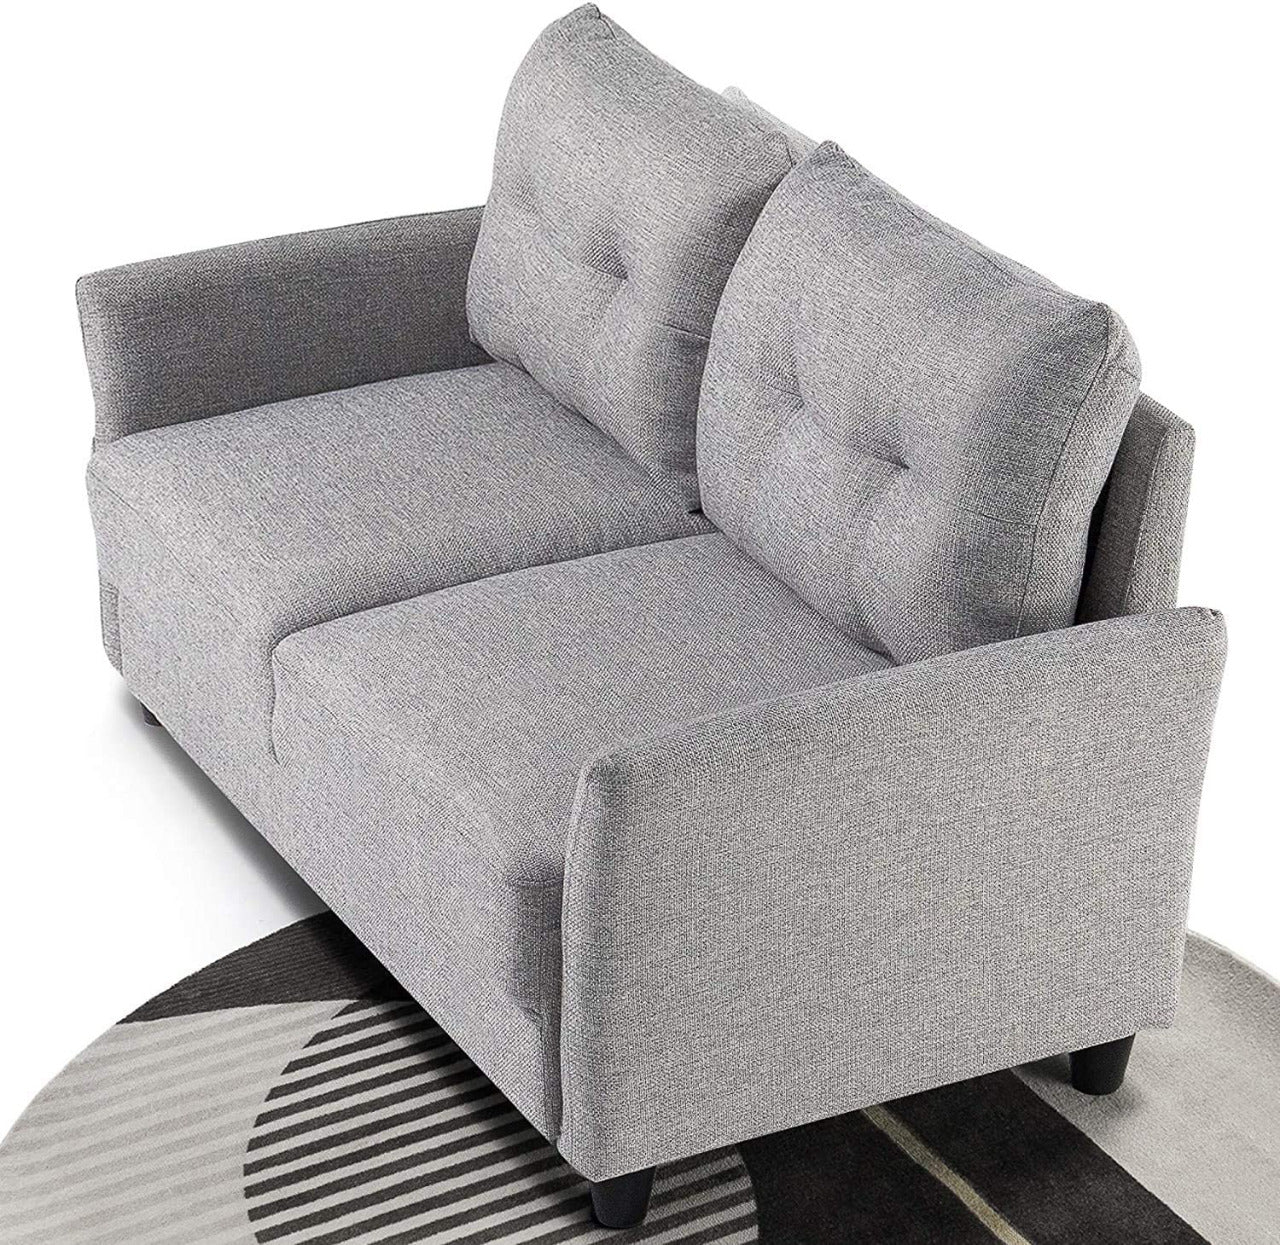 2 Seater Sofa : Loveseat Sofa Tufted Cushions Lyon Blue